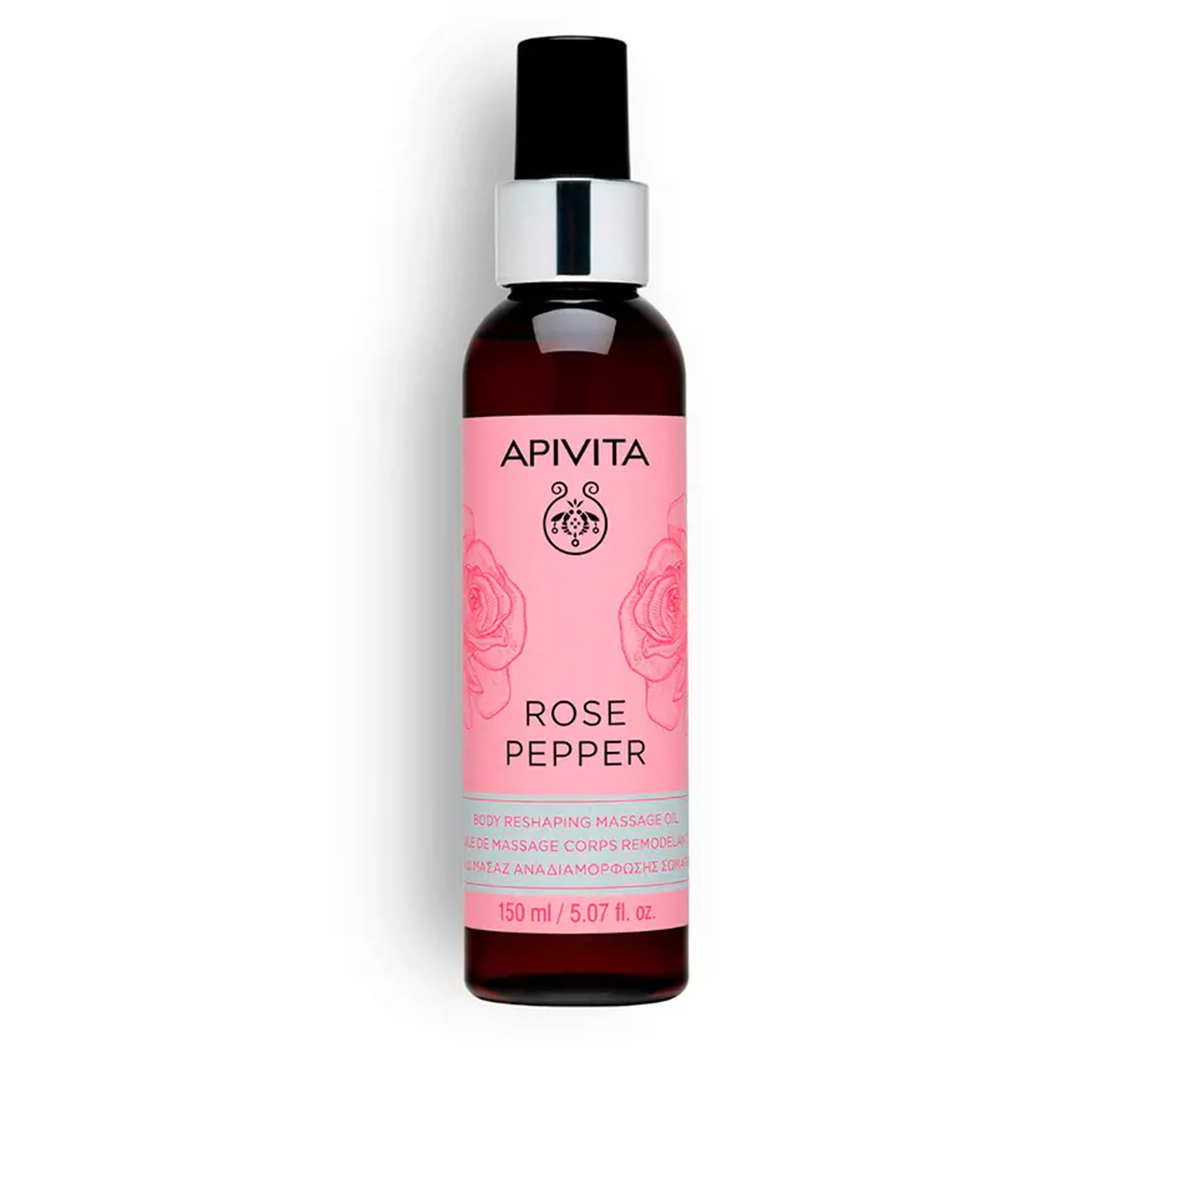 Rose Pepper aceite corporal de Apivita 21,25 euros